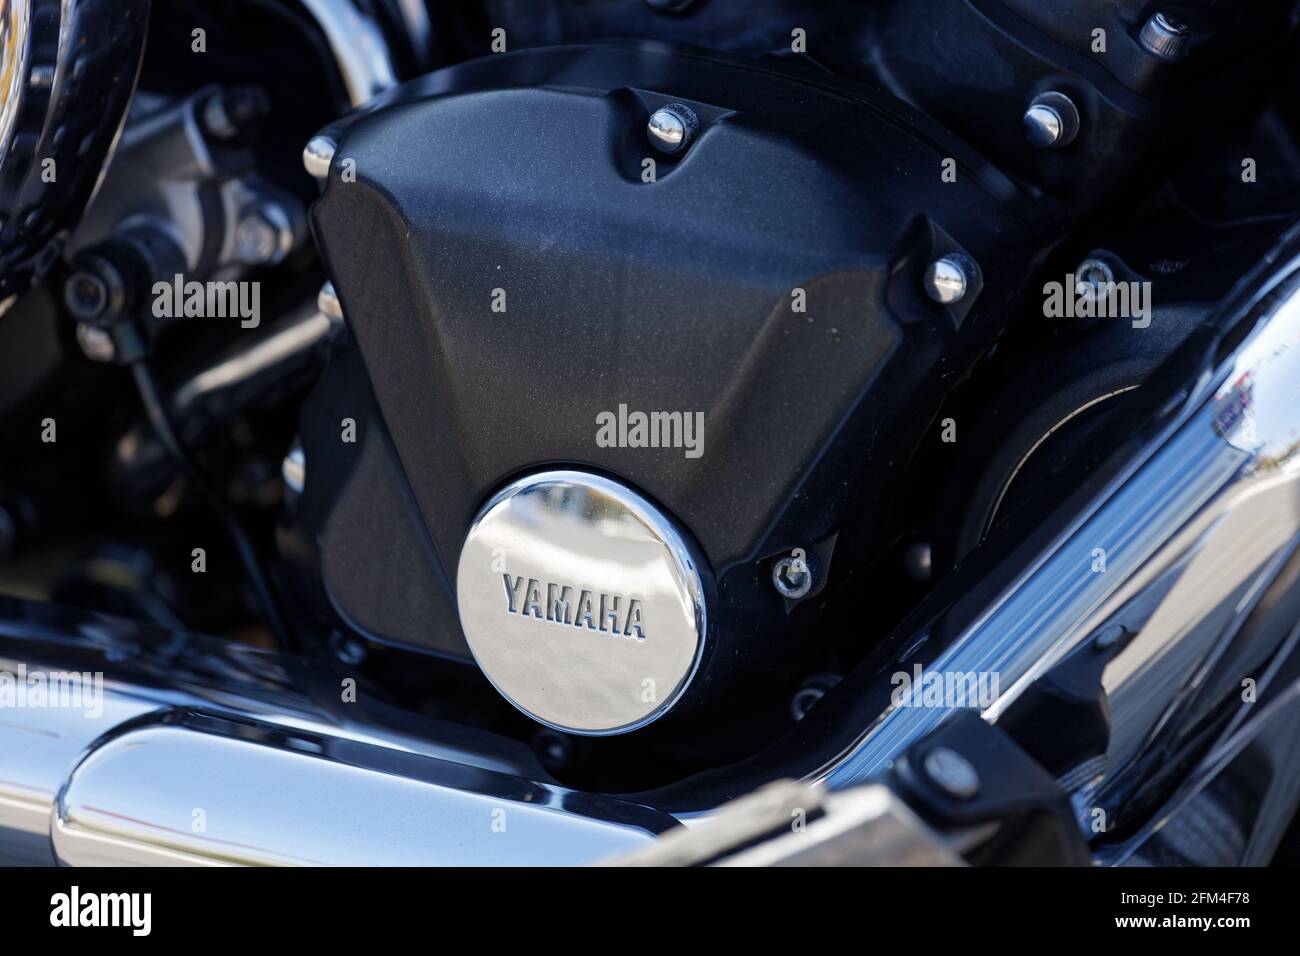 Ulyanovsk, Russia - 03 ottobre 2020. Motore di moto con logo testo Yamaha. Foto Stock